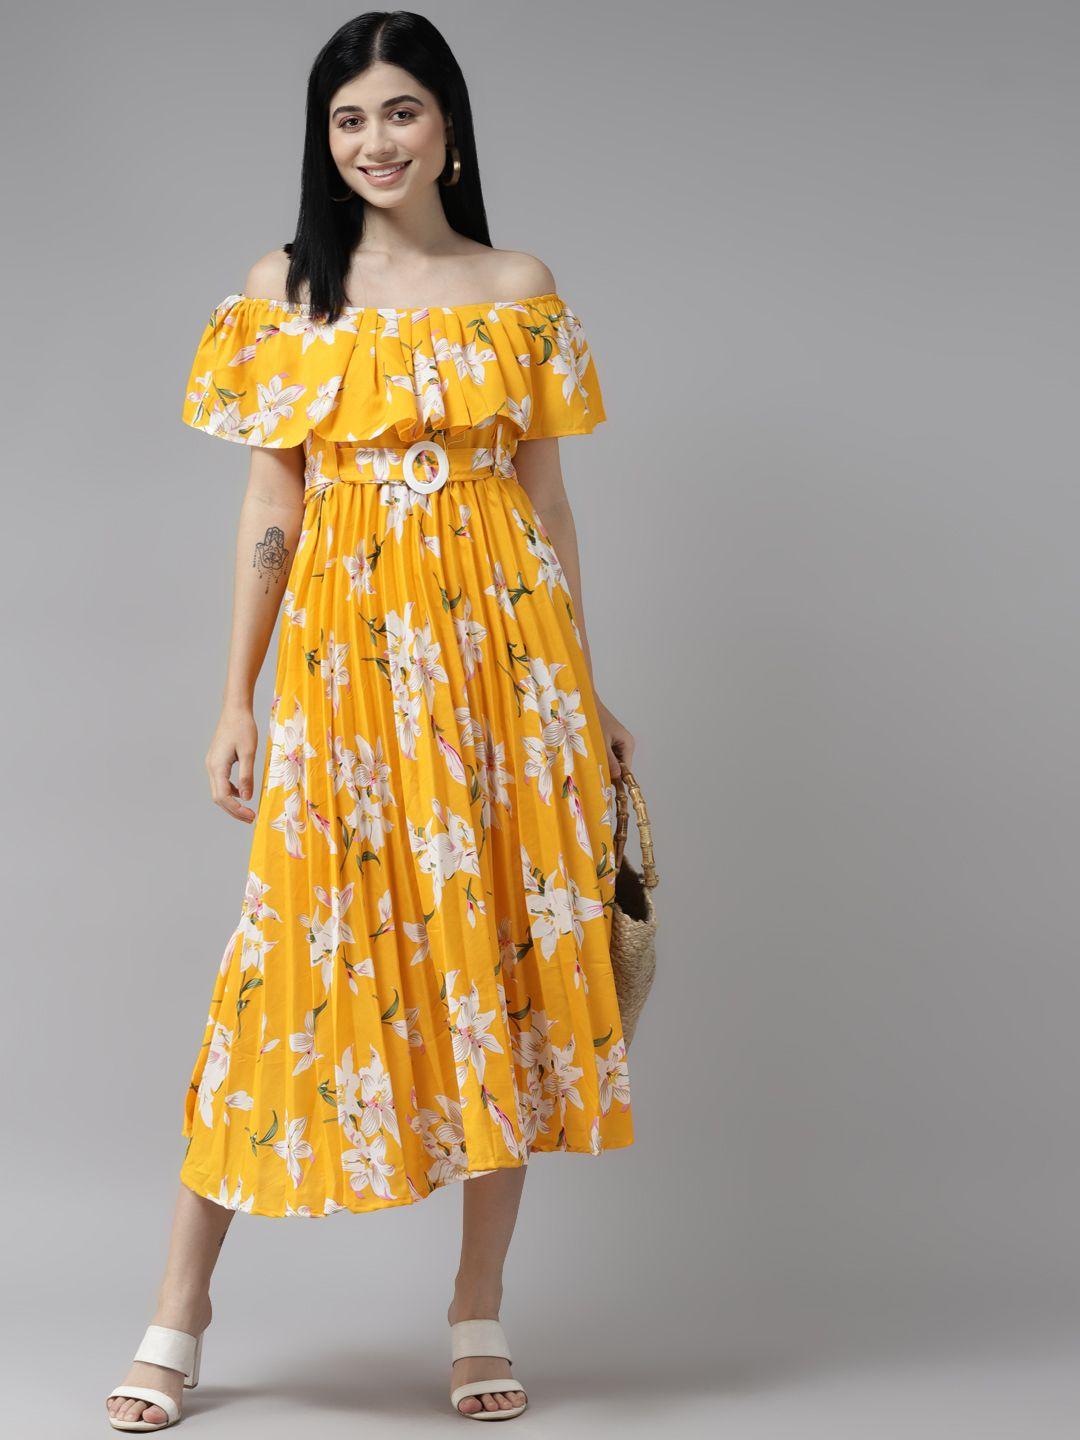 aarika yellow & white floral printed accordion pleats off-shoulder a-line midi dress